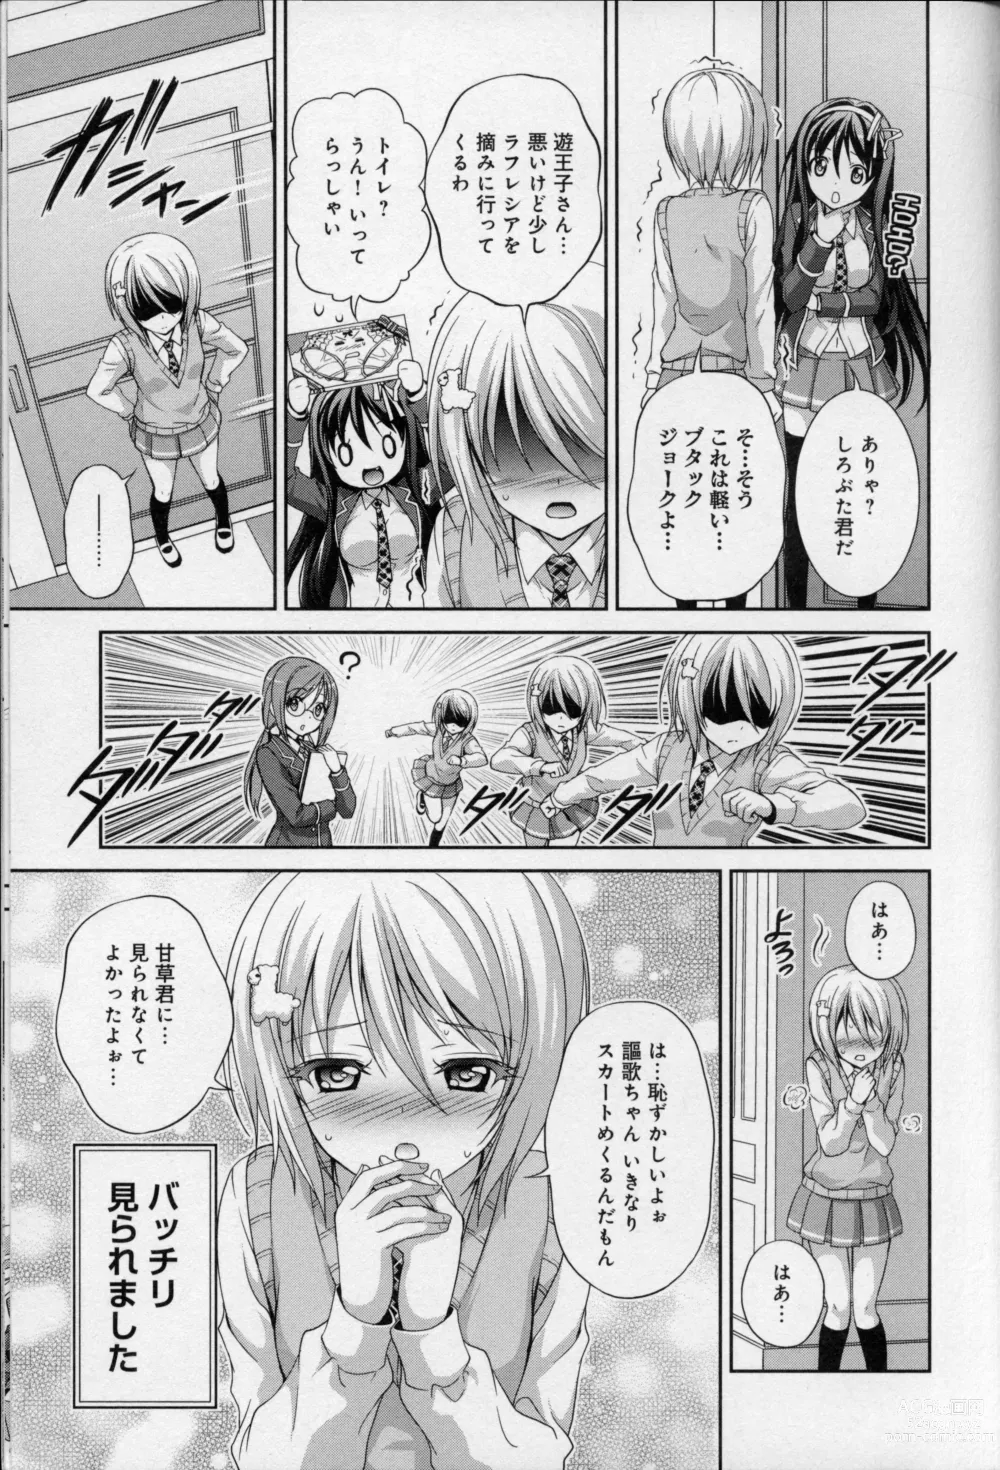 Page 26 of manga 「どっちを選ぶ?」ダブル描き下ろしコミックス Blu-ray＆DVD 第2巻 同梱特典